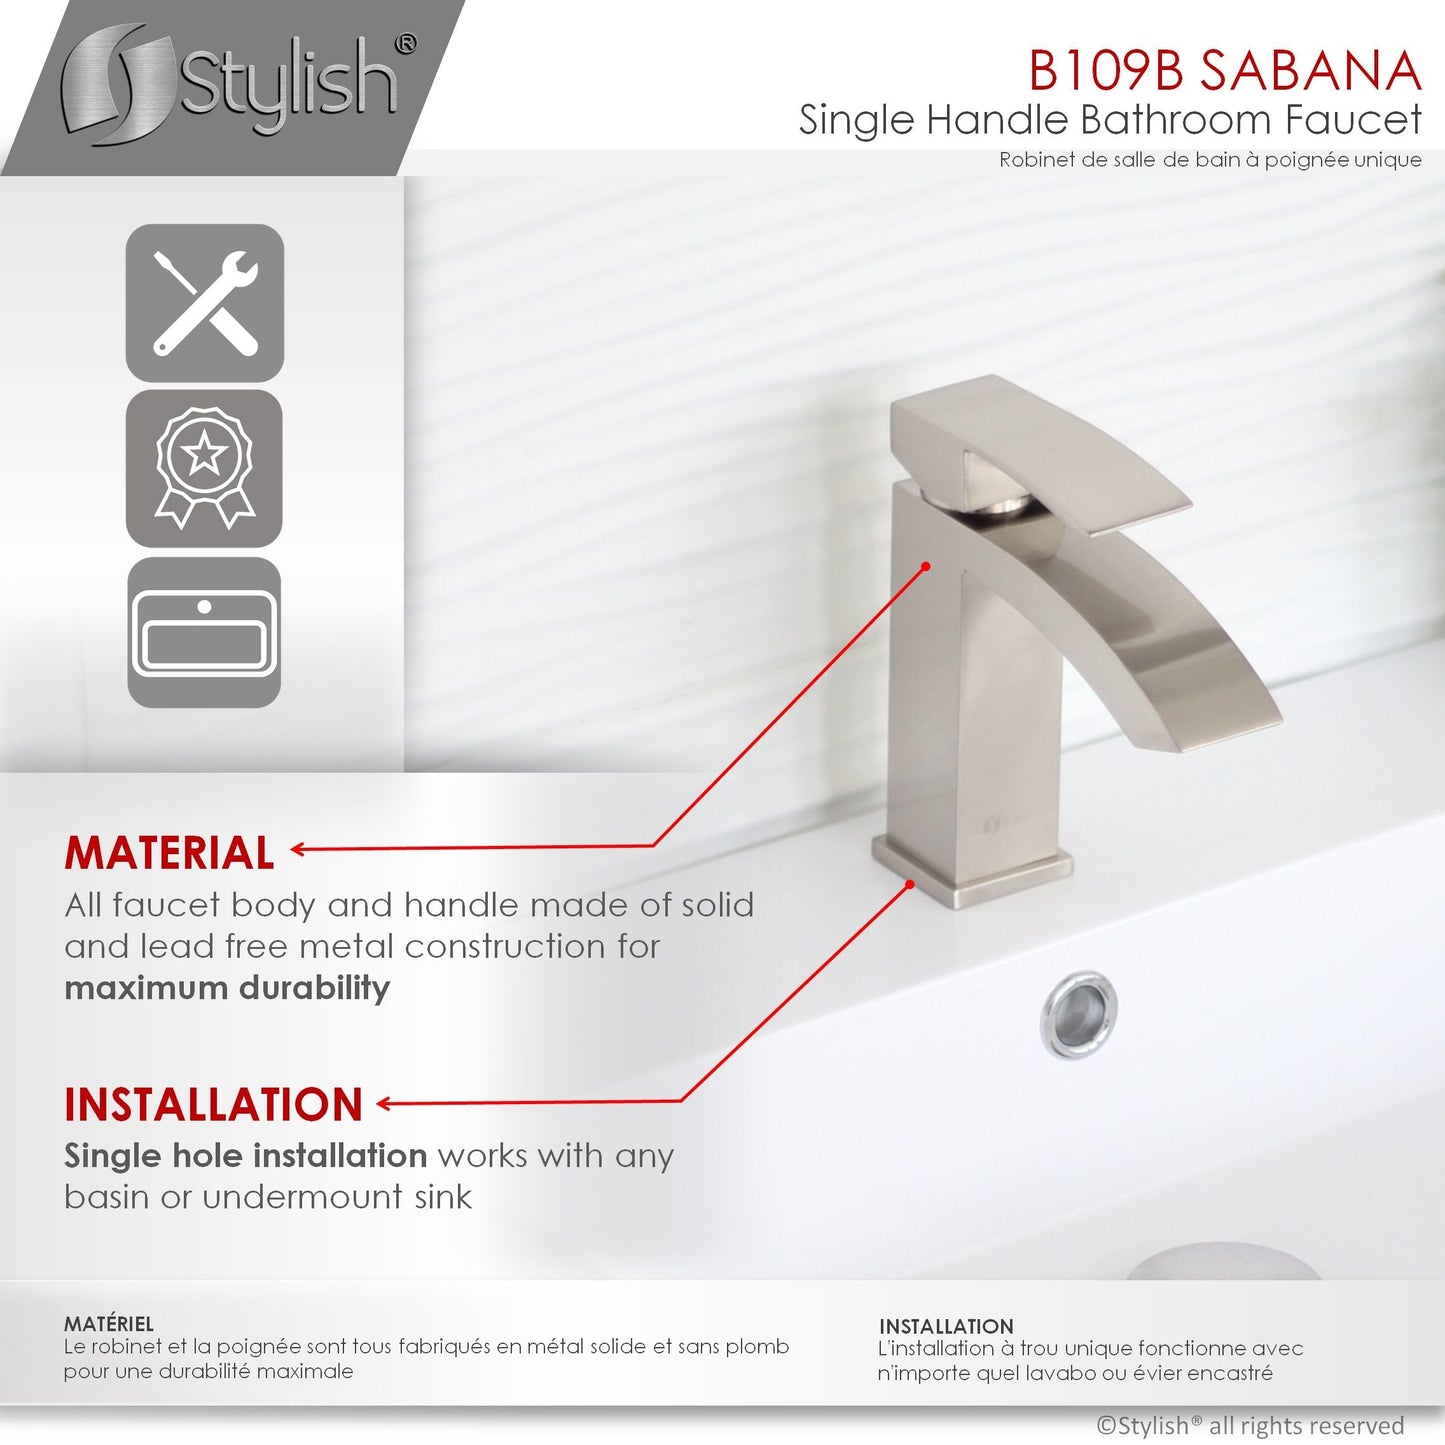 Stylish Sabana 7" Single Handle Bathroom Faucet for Single Hole Brass Basin Mixer Tap, Brushed Nickel Finish B-109B